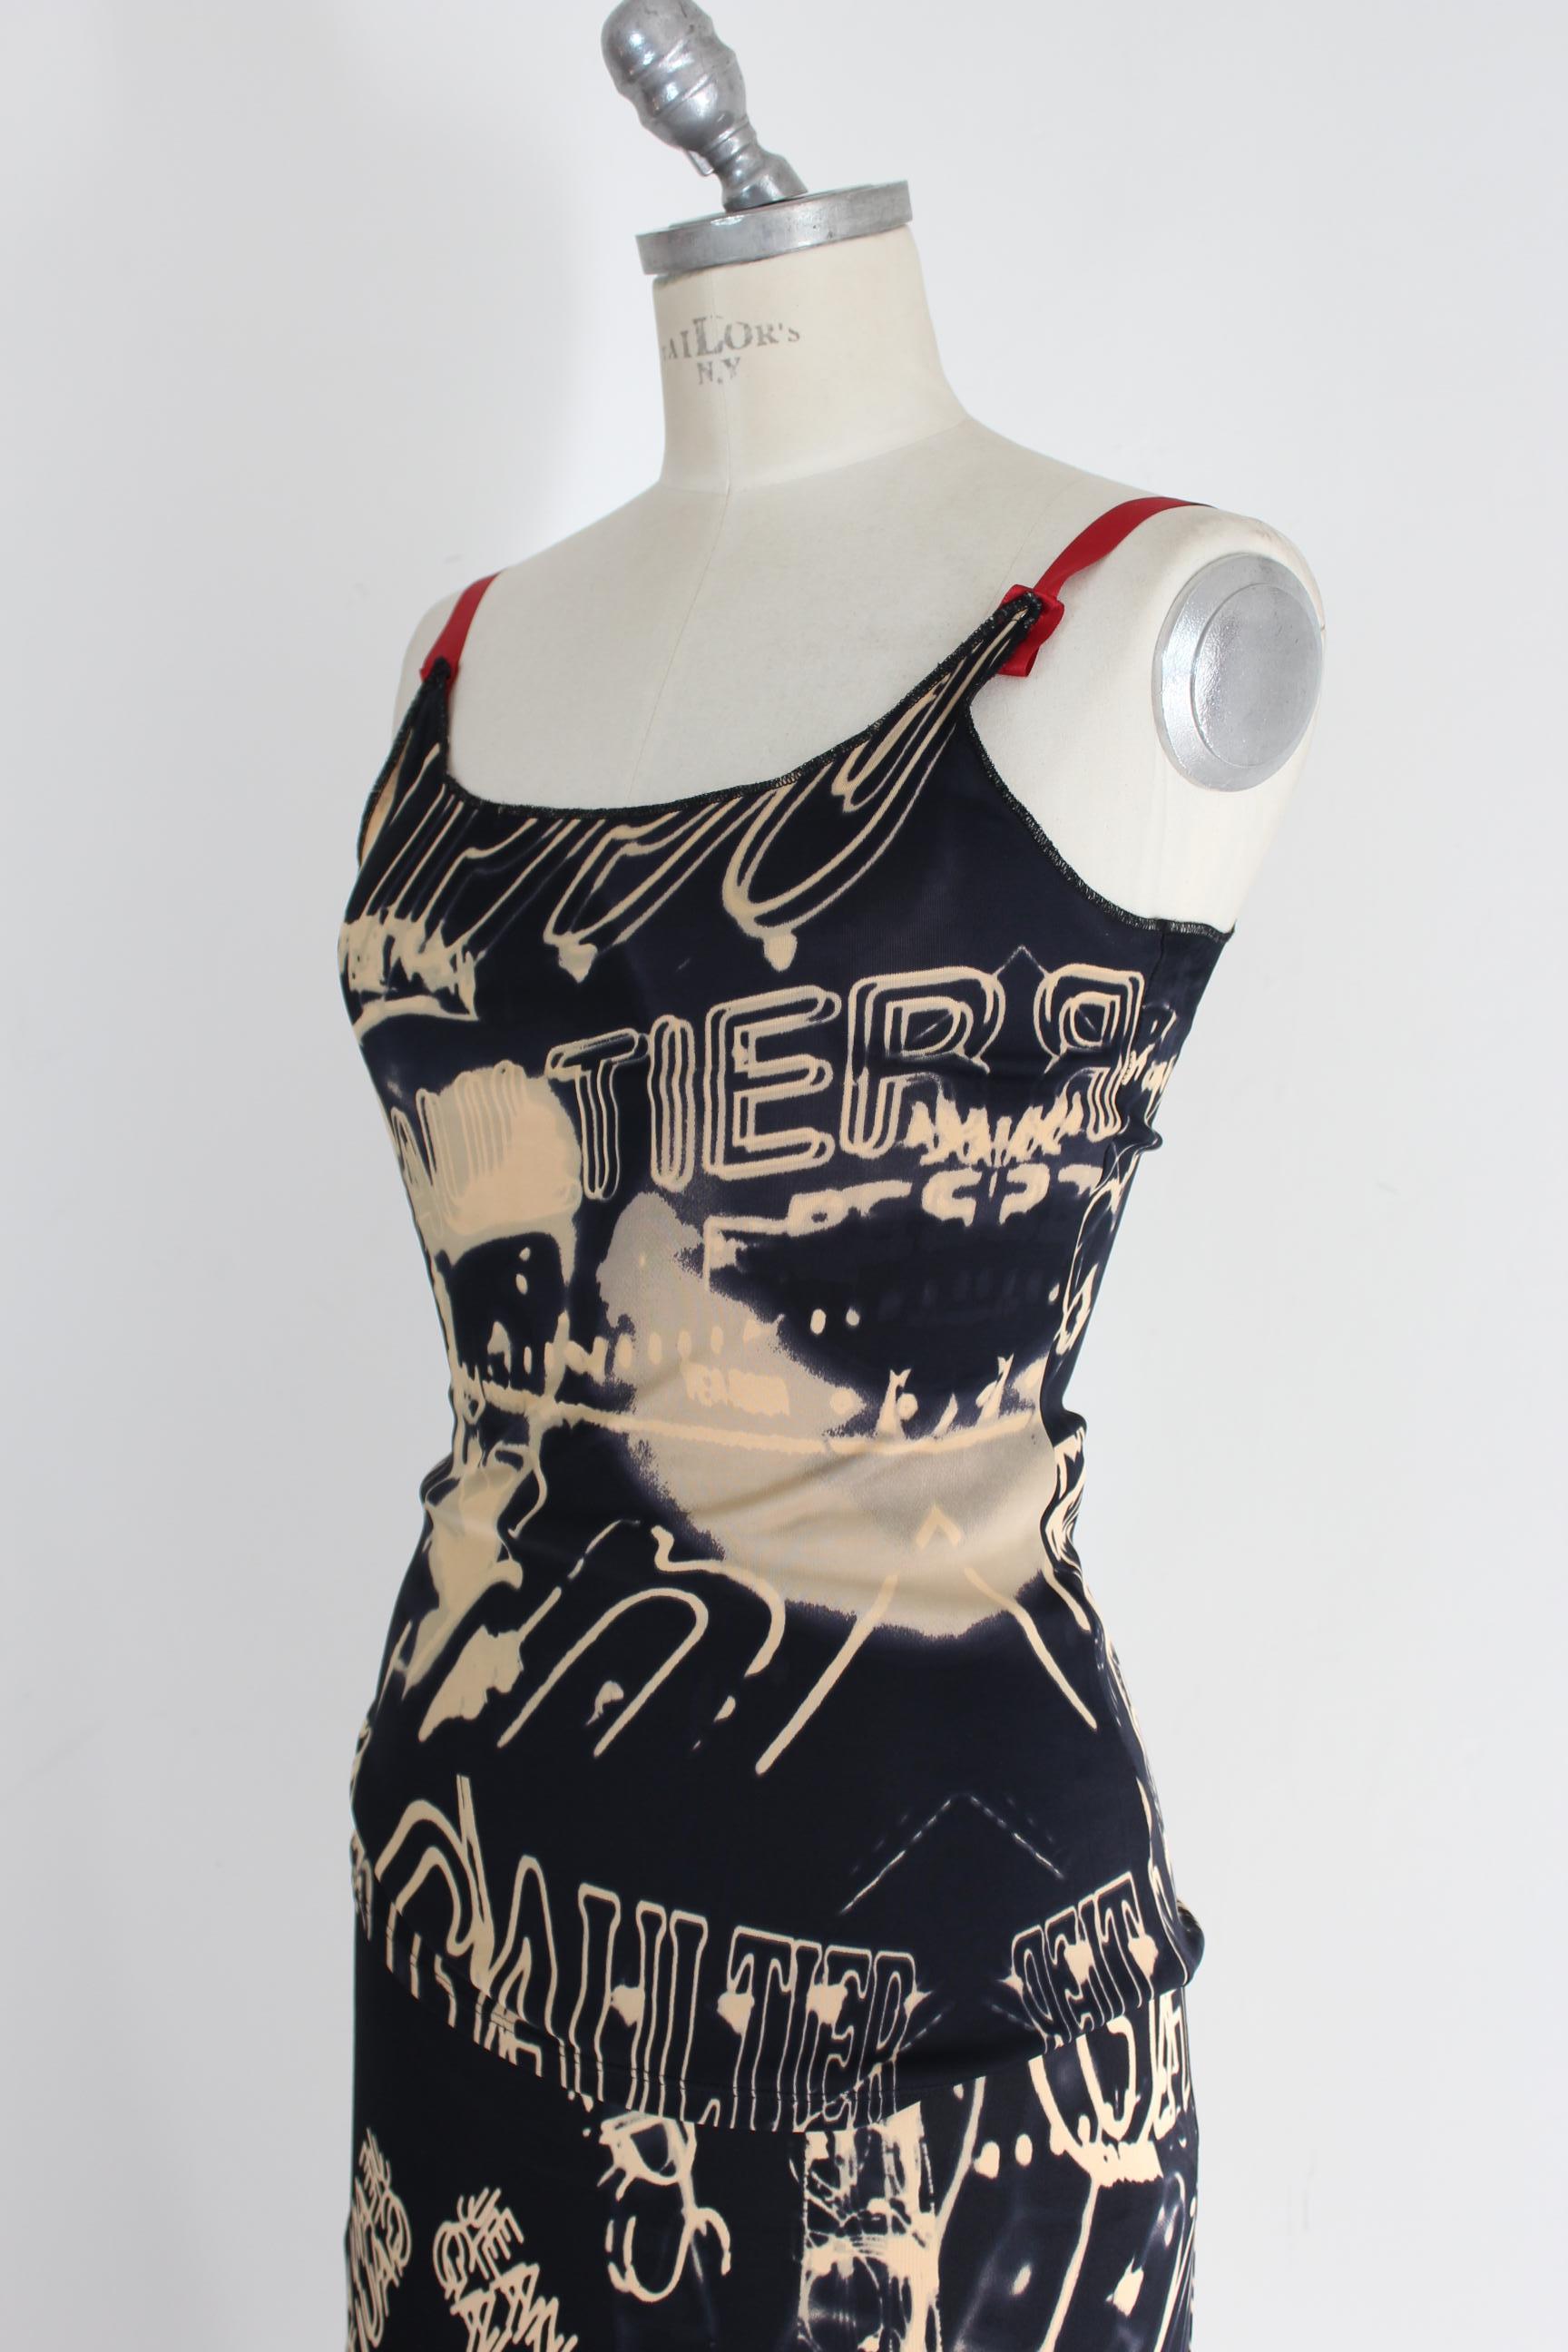 Black Jean Paul Gaultier Blue Navy Beige Skirt Suit Dress Monogram Graffiti 1998